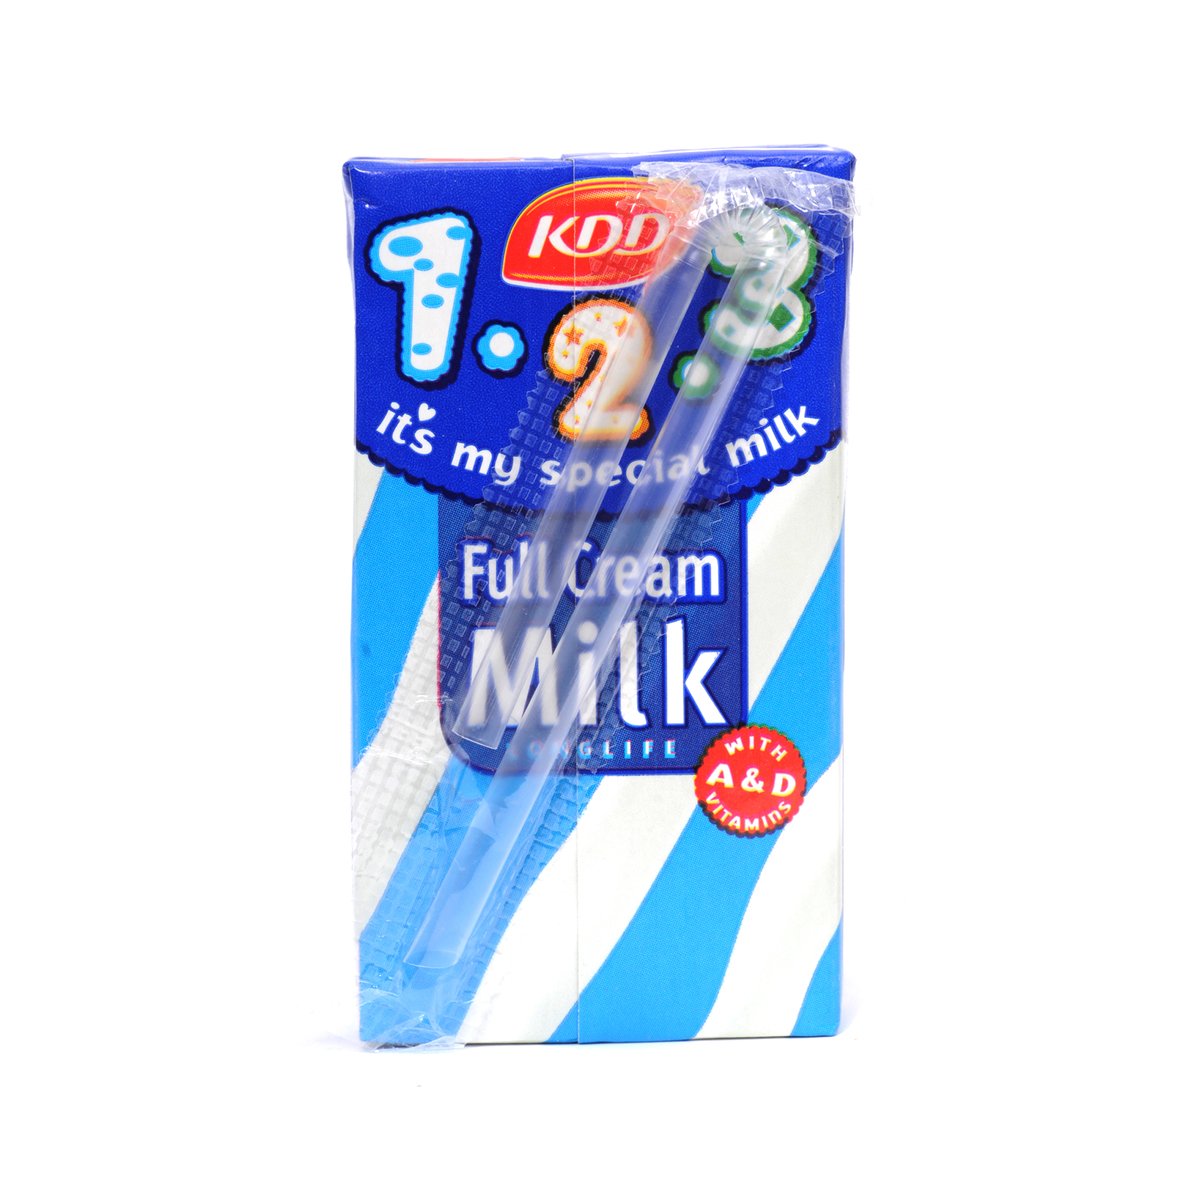 KDD 1-2-3 Full Cream Milk Long Life 125ml x 6 Pieces